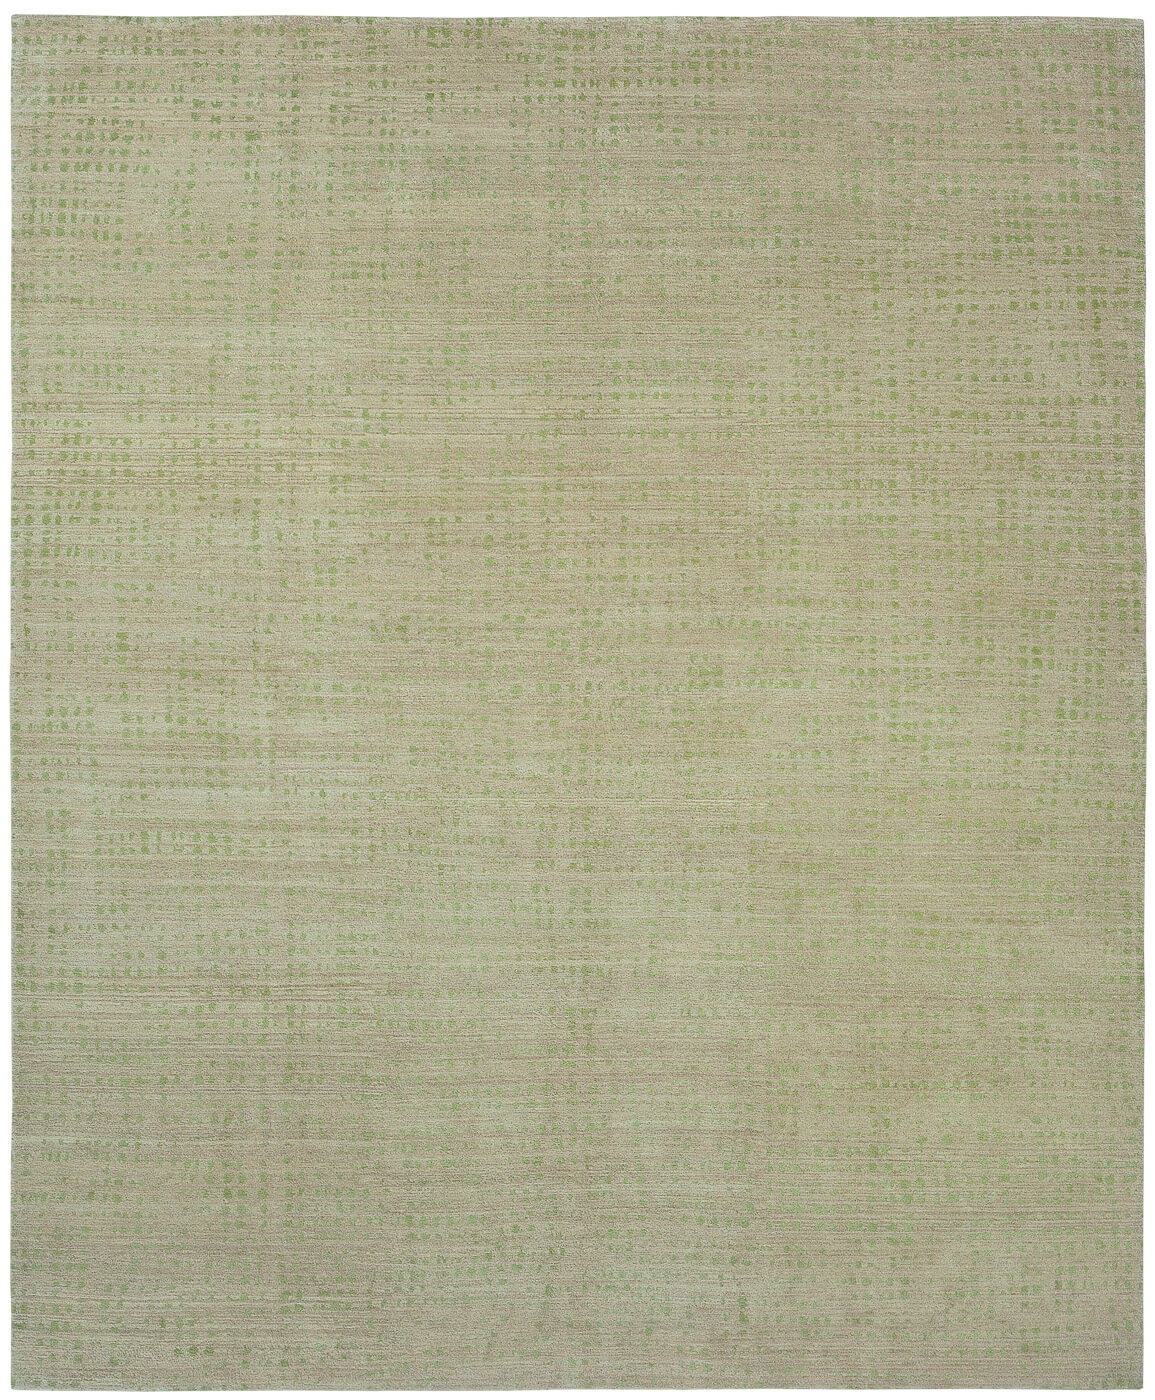 Hand-woven Green Luxury Rug ☞ Size: 200 x 300 cm